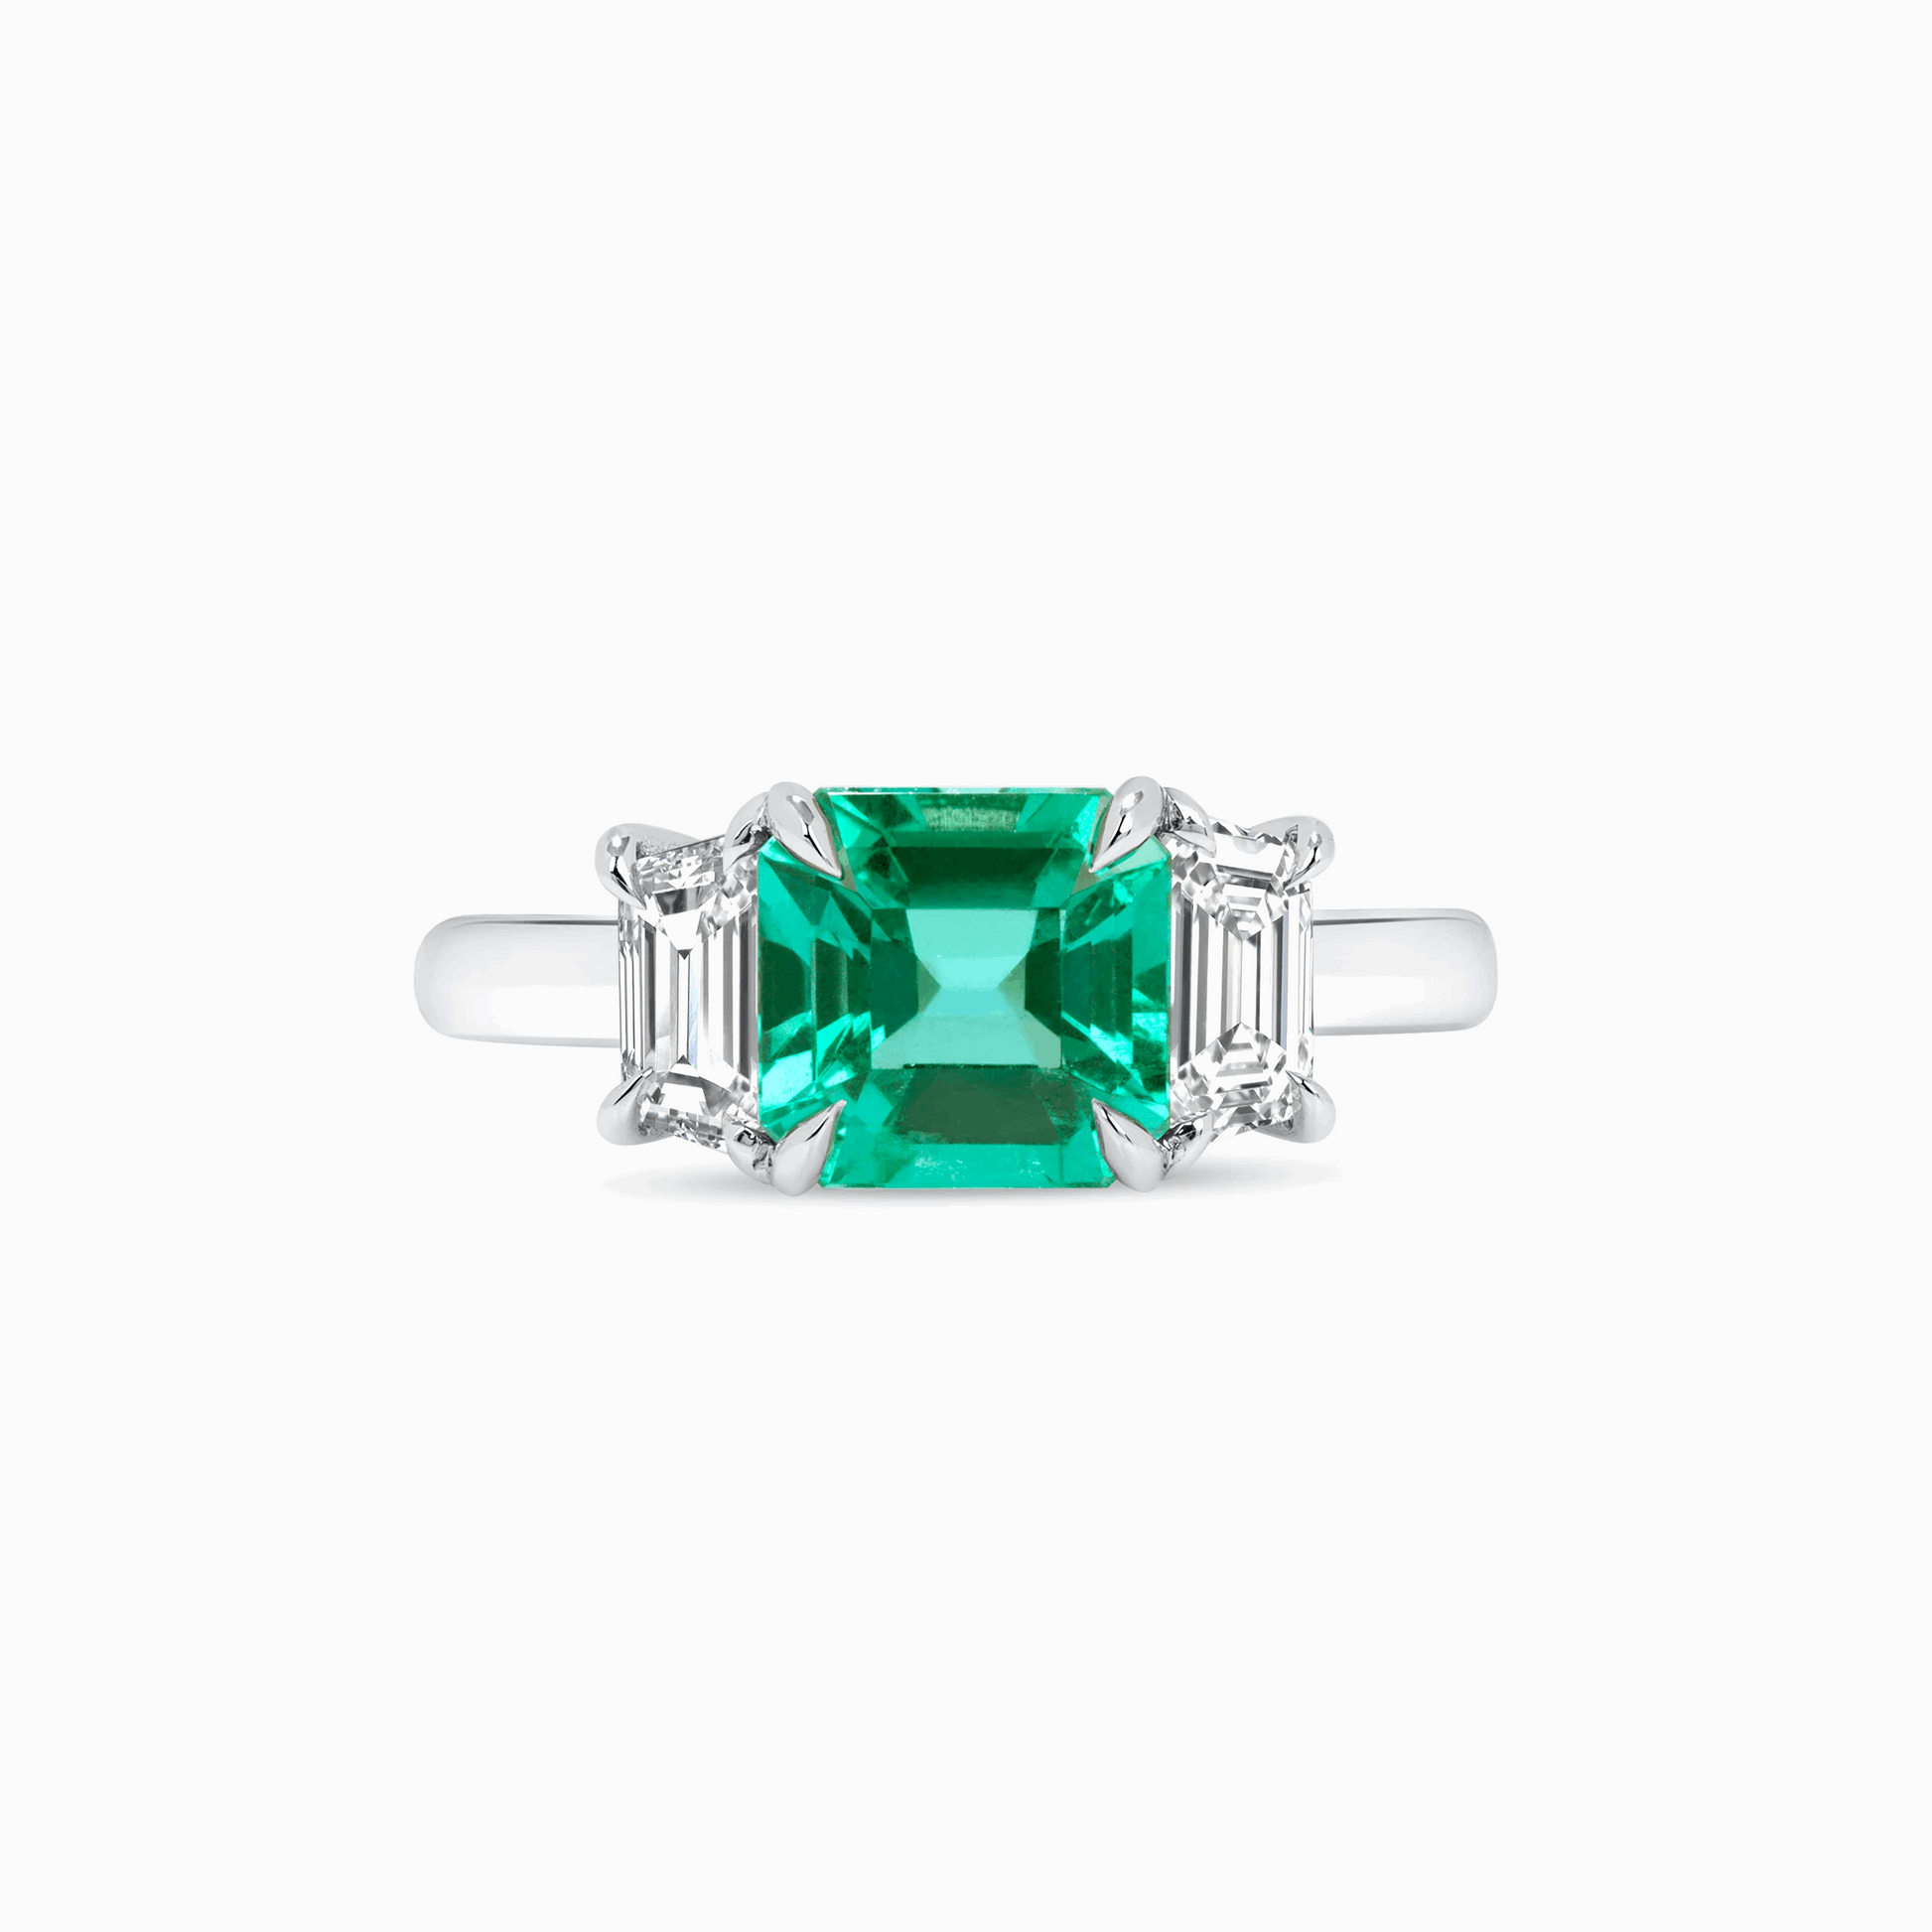 Emerald Diamond White Gold Ring on a white background